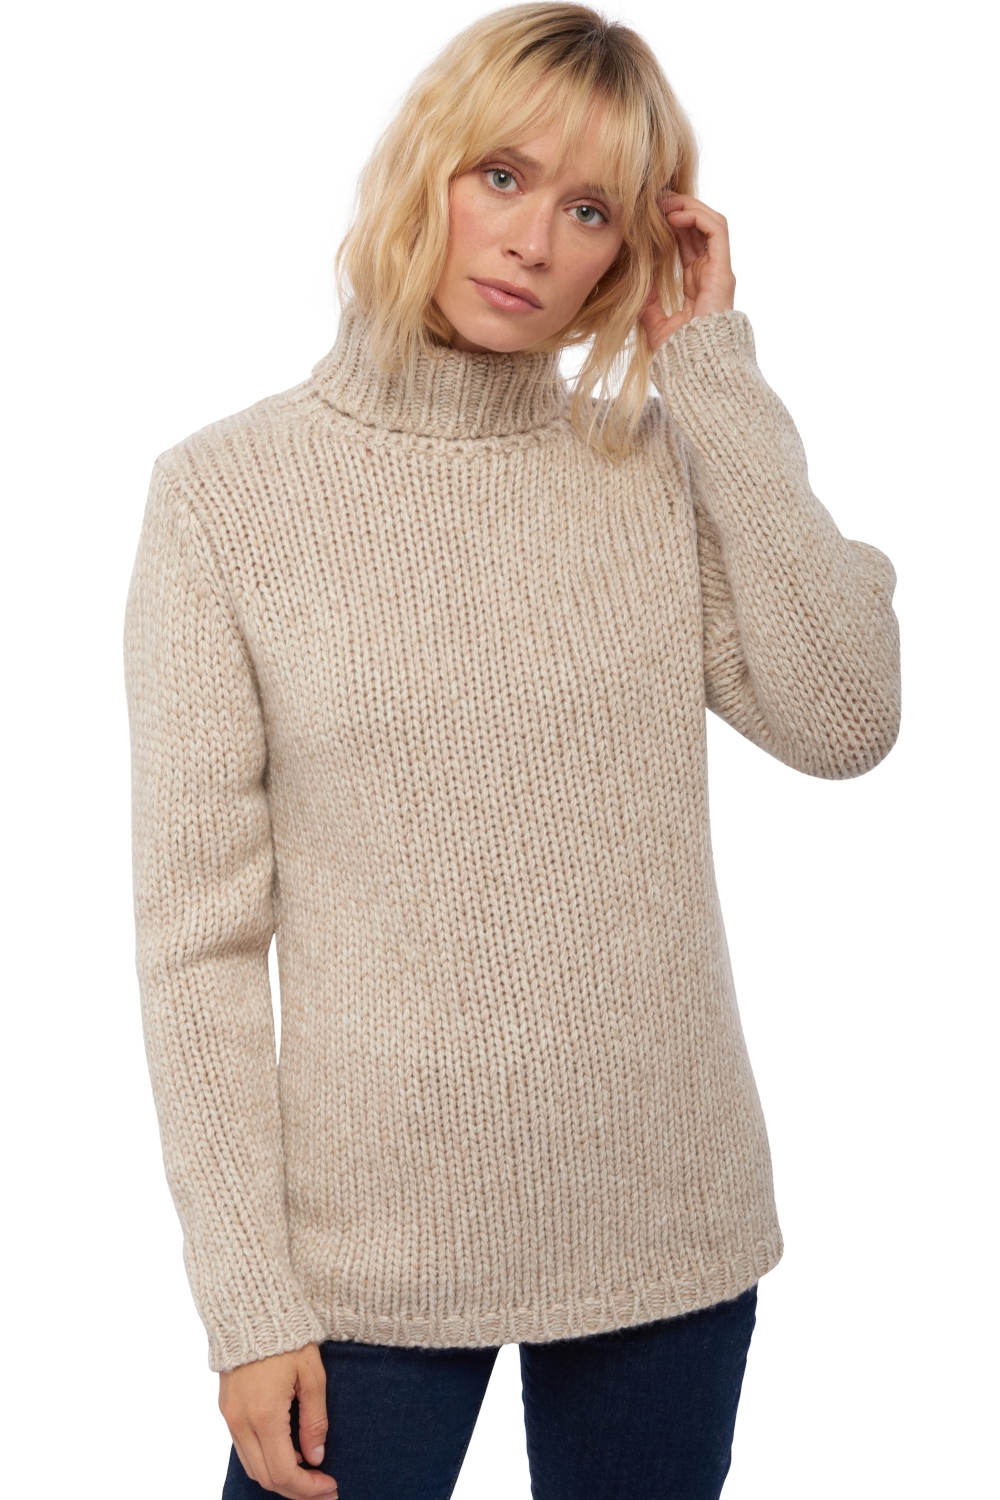 Cashmere ladies chunky sweater vicenza natural ecru natural stone 2xl